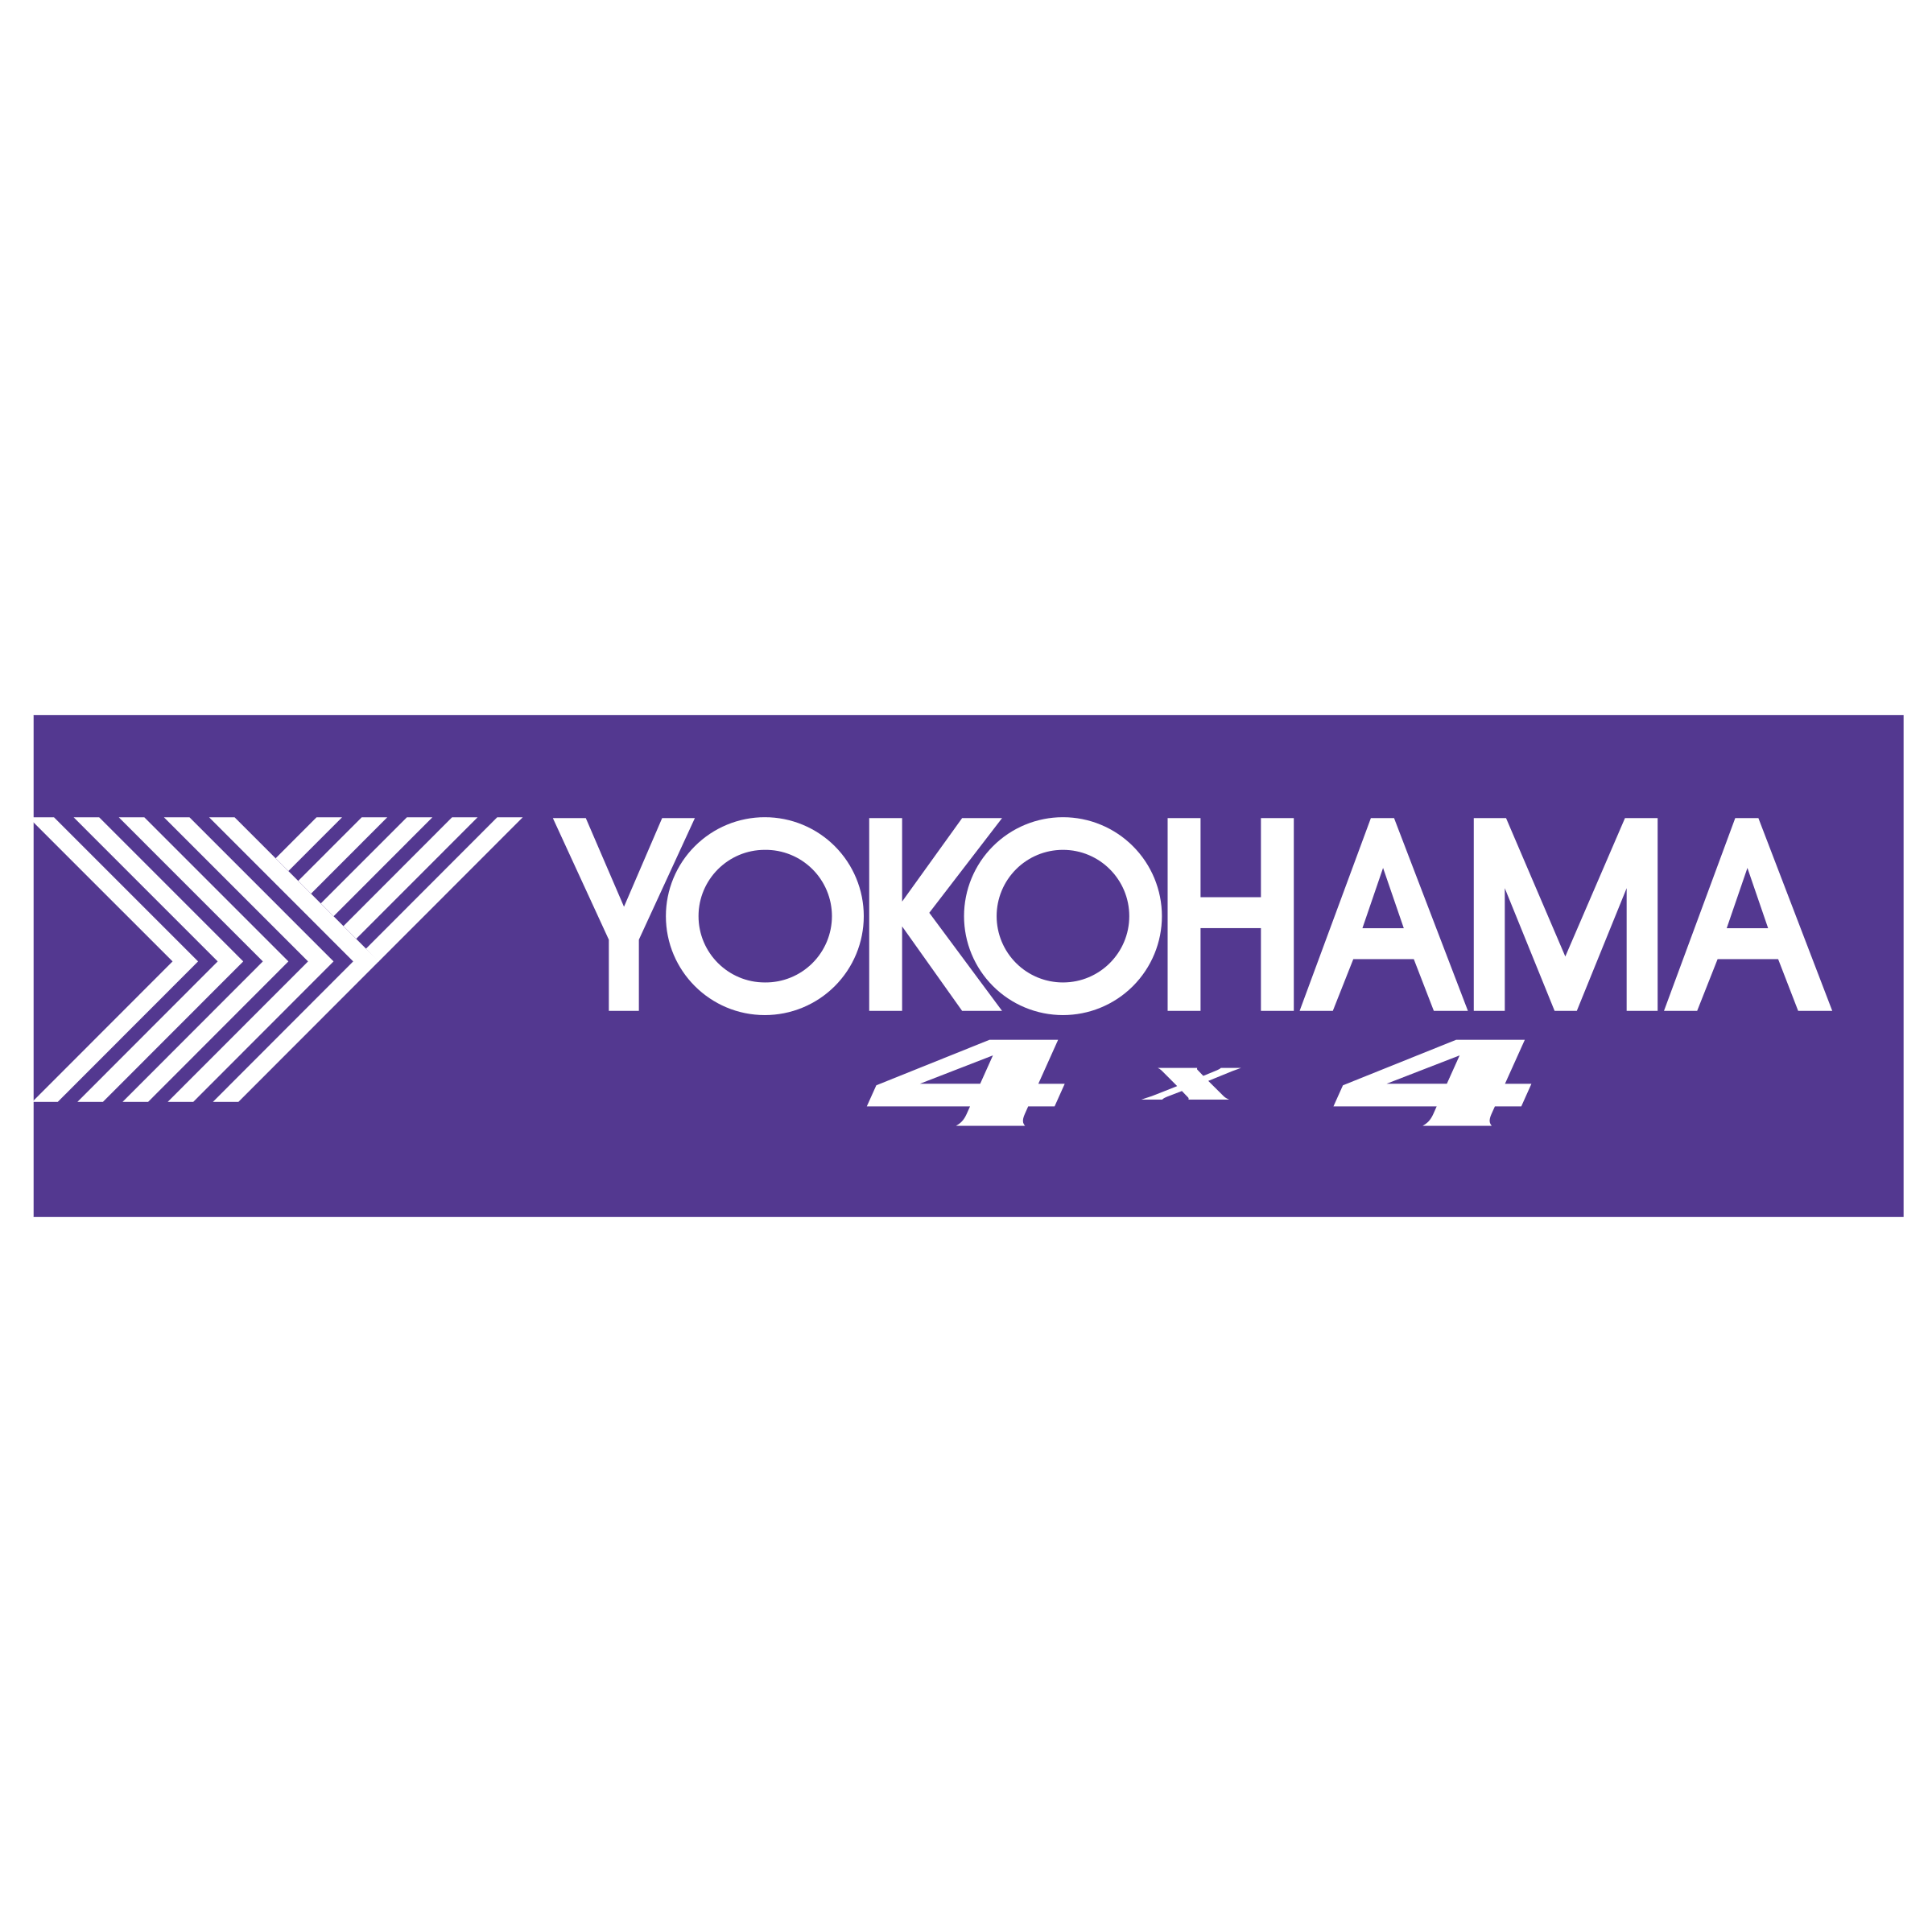 Yokohama Logo - Yokohama Logo PNG Transparent & SVG Vector - Freebie Supply